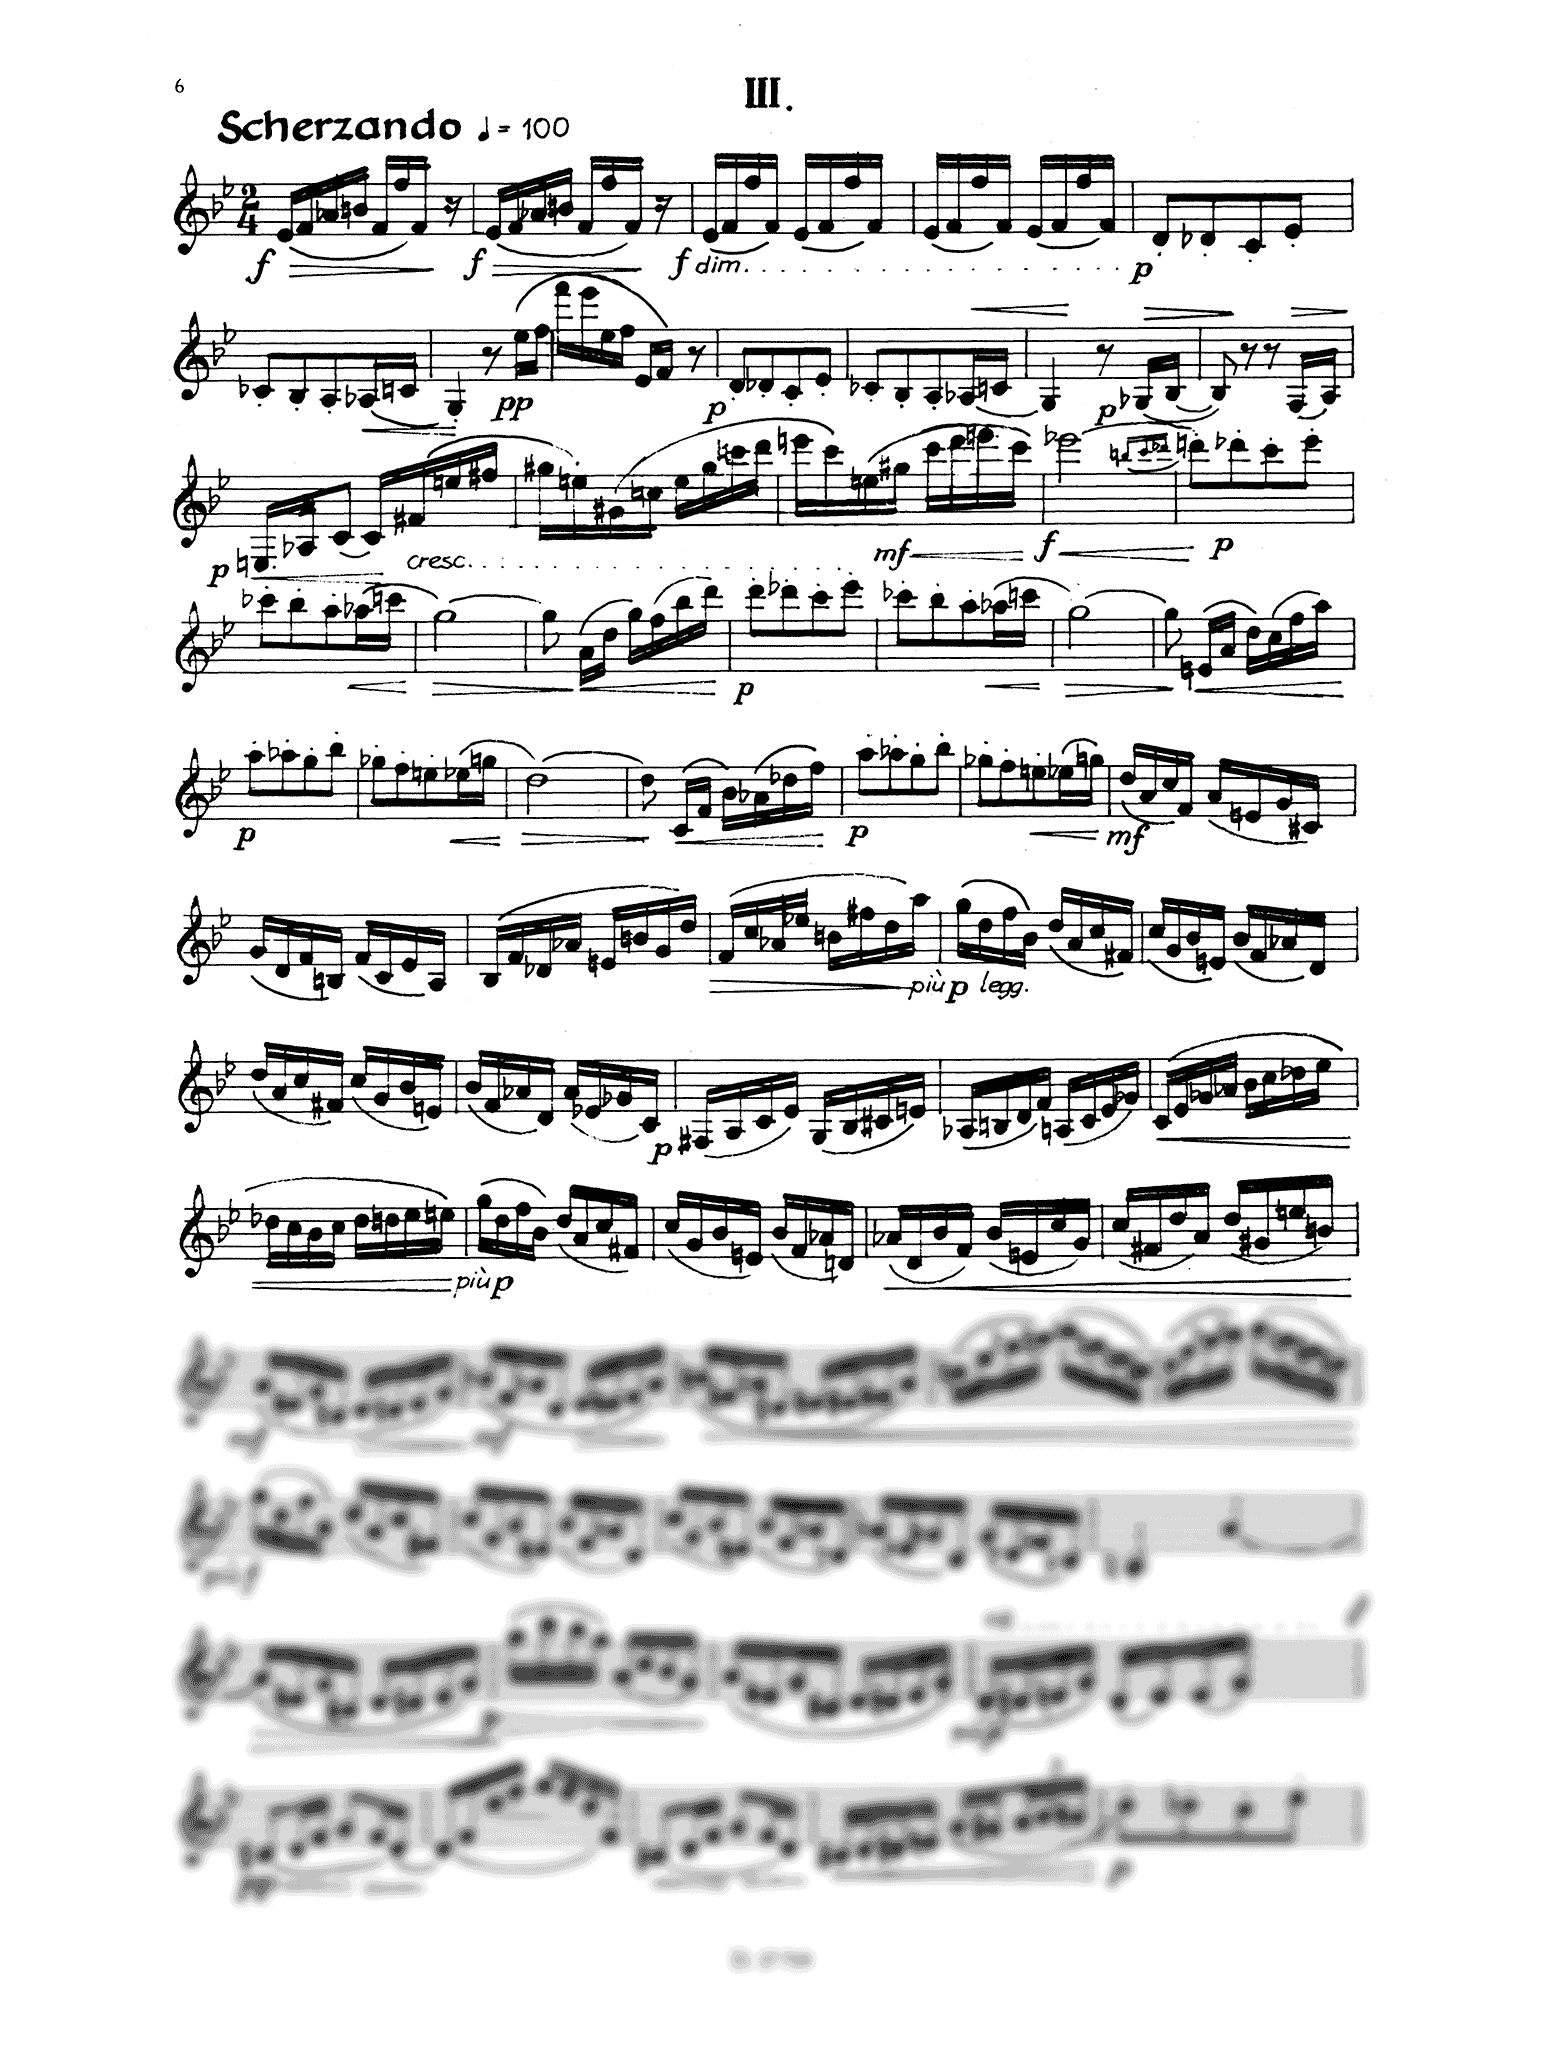 Kubizek 5 Studies on Claude Debussy’s Première rhapsodie clarinet page 6